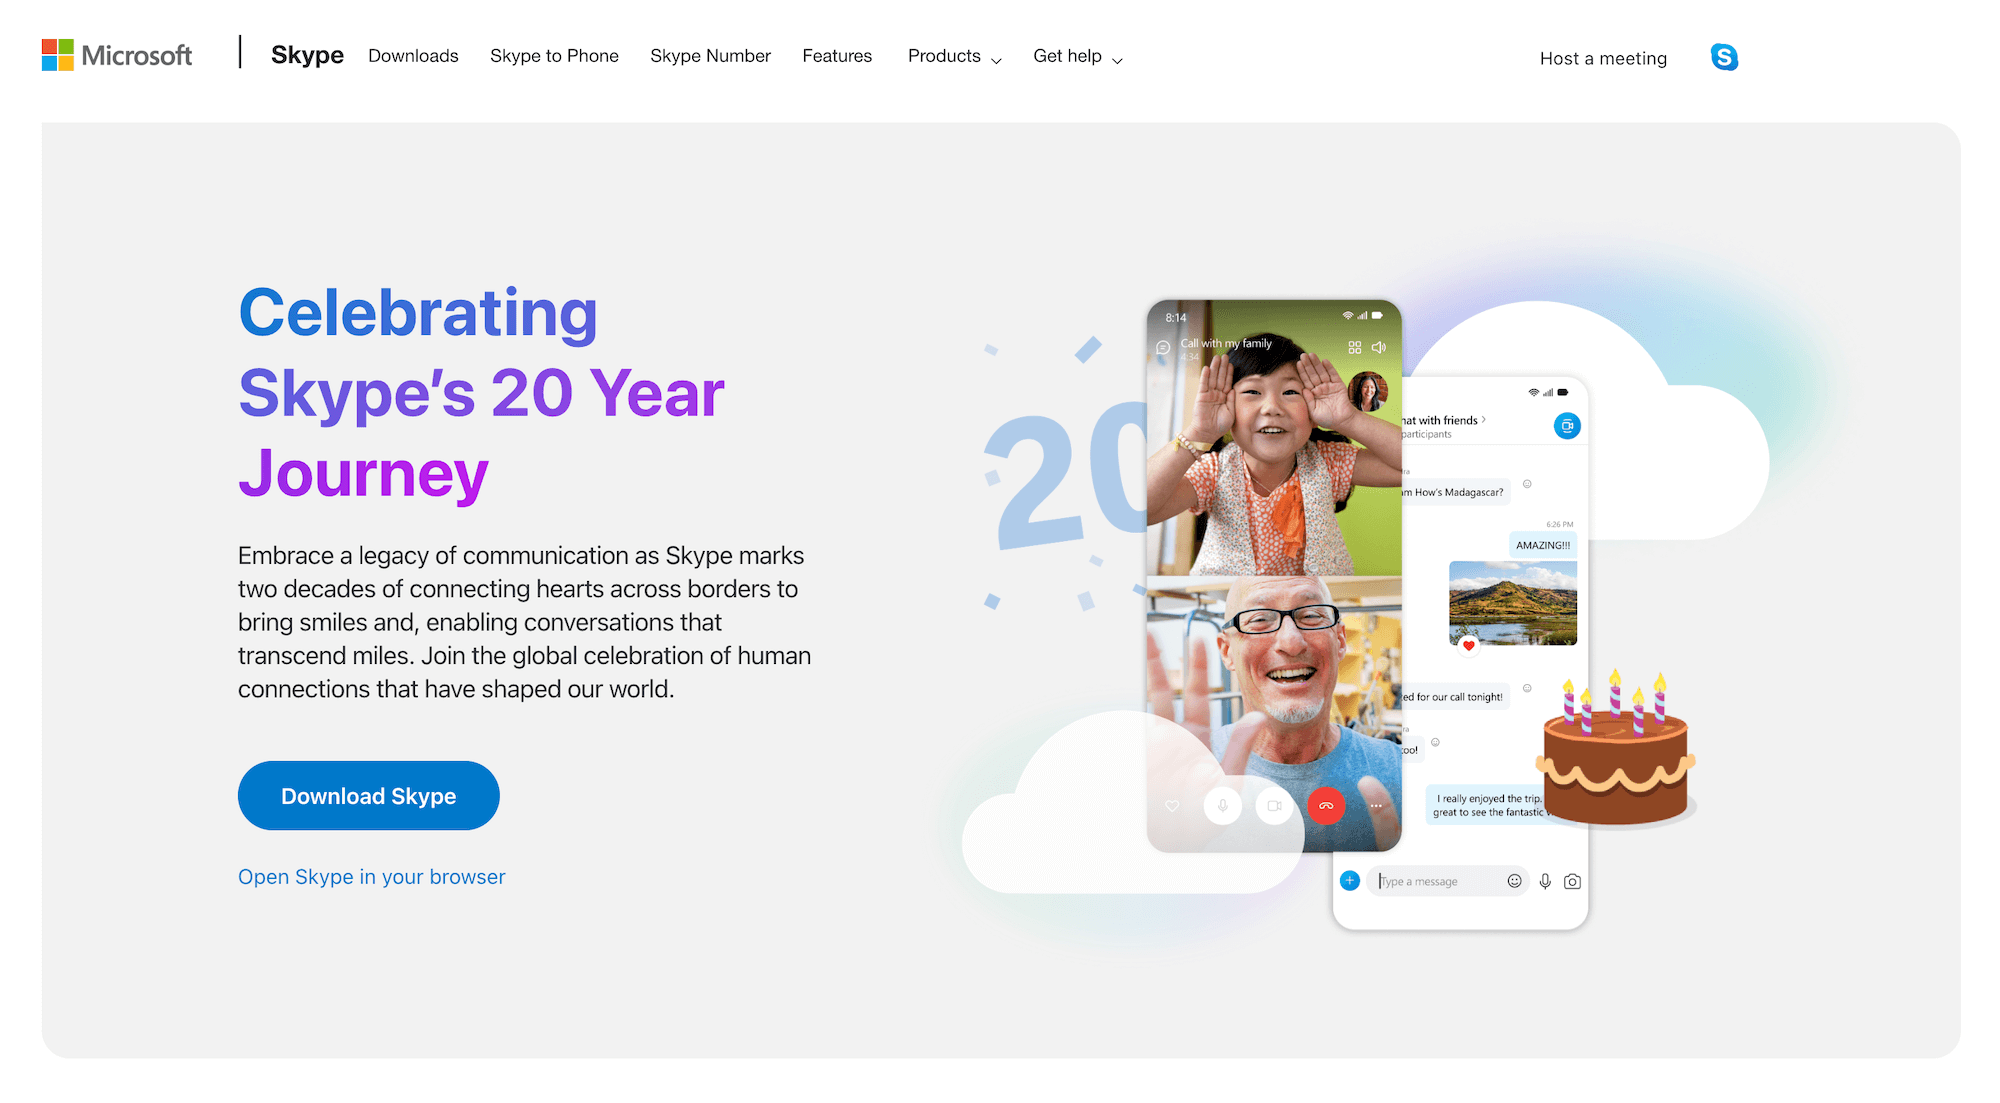 Skype homepage: Celebrating Skype's 20 Year Journey